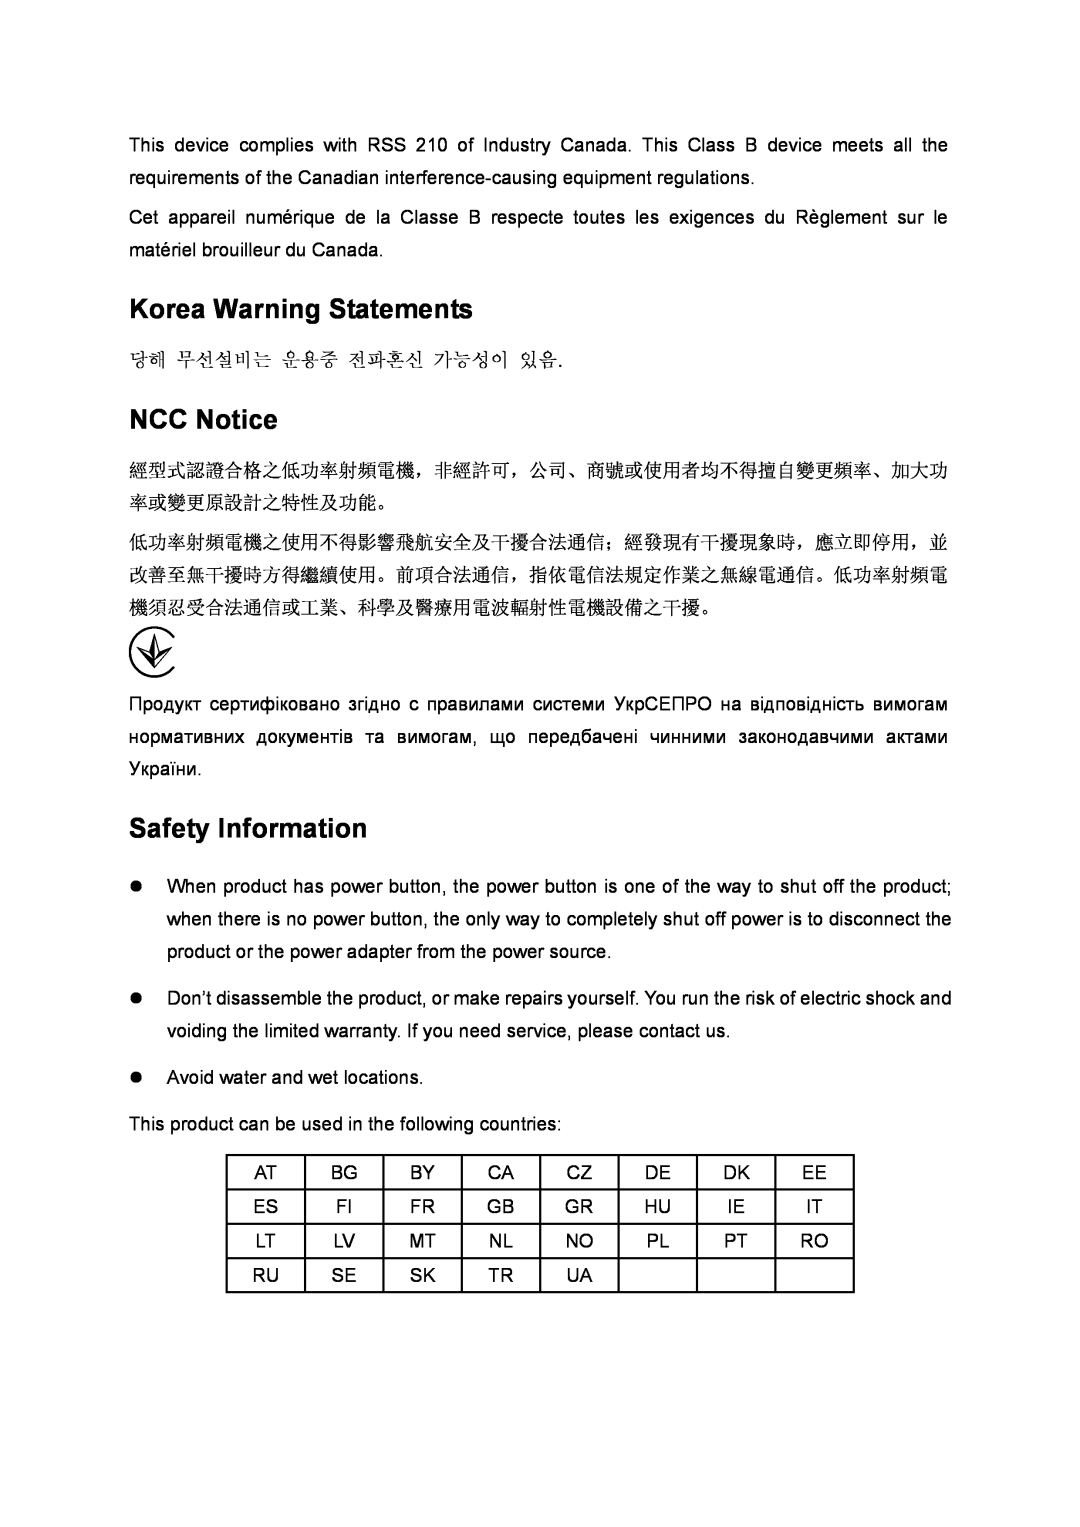 TP-Link TL-WR843ND manual Korea Warning Statements, NCC Notice, Safety Information 